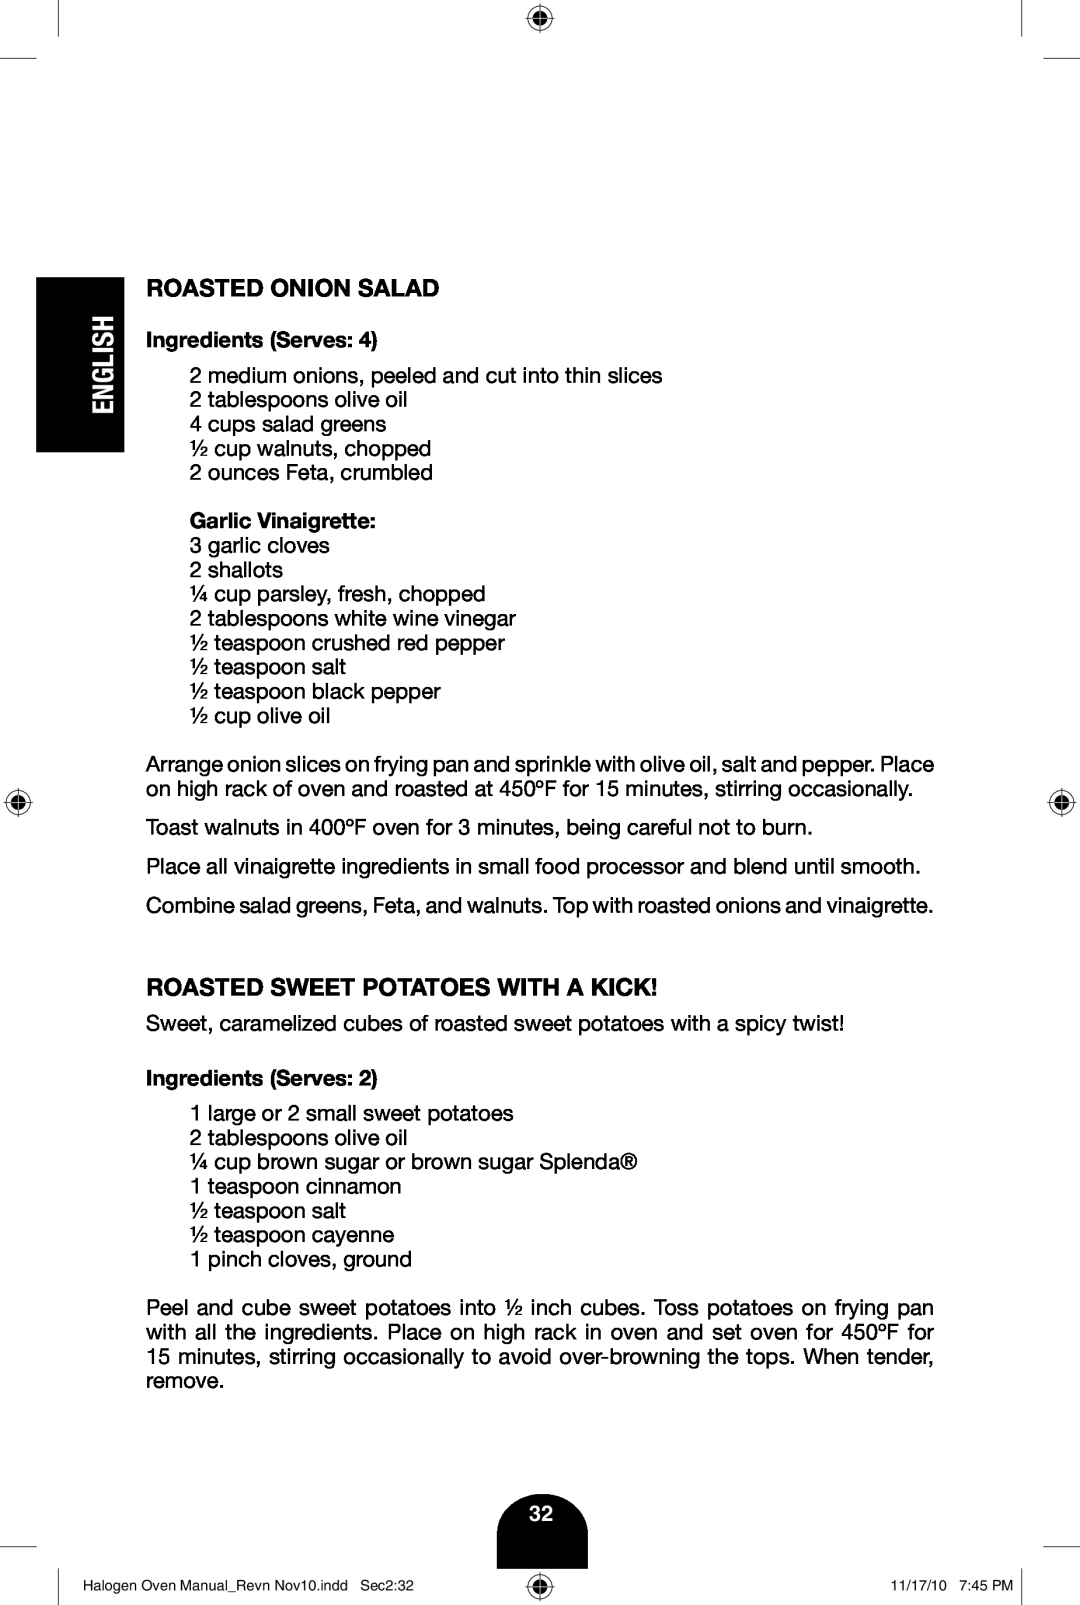 Fagor America 670040380 user manual Roasted Onion Salad, Roasted Sweet Potatoes With A Kick, English 